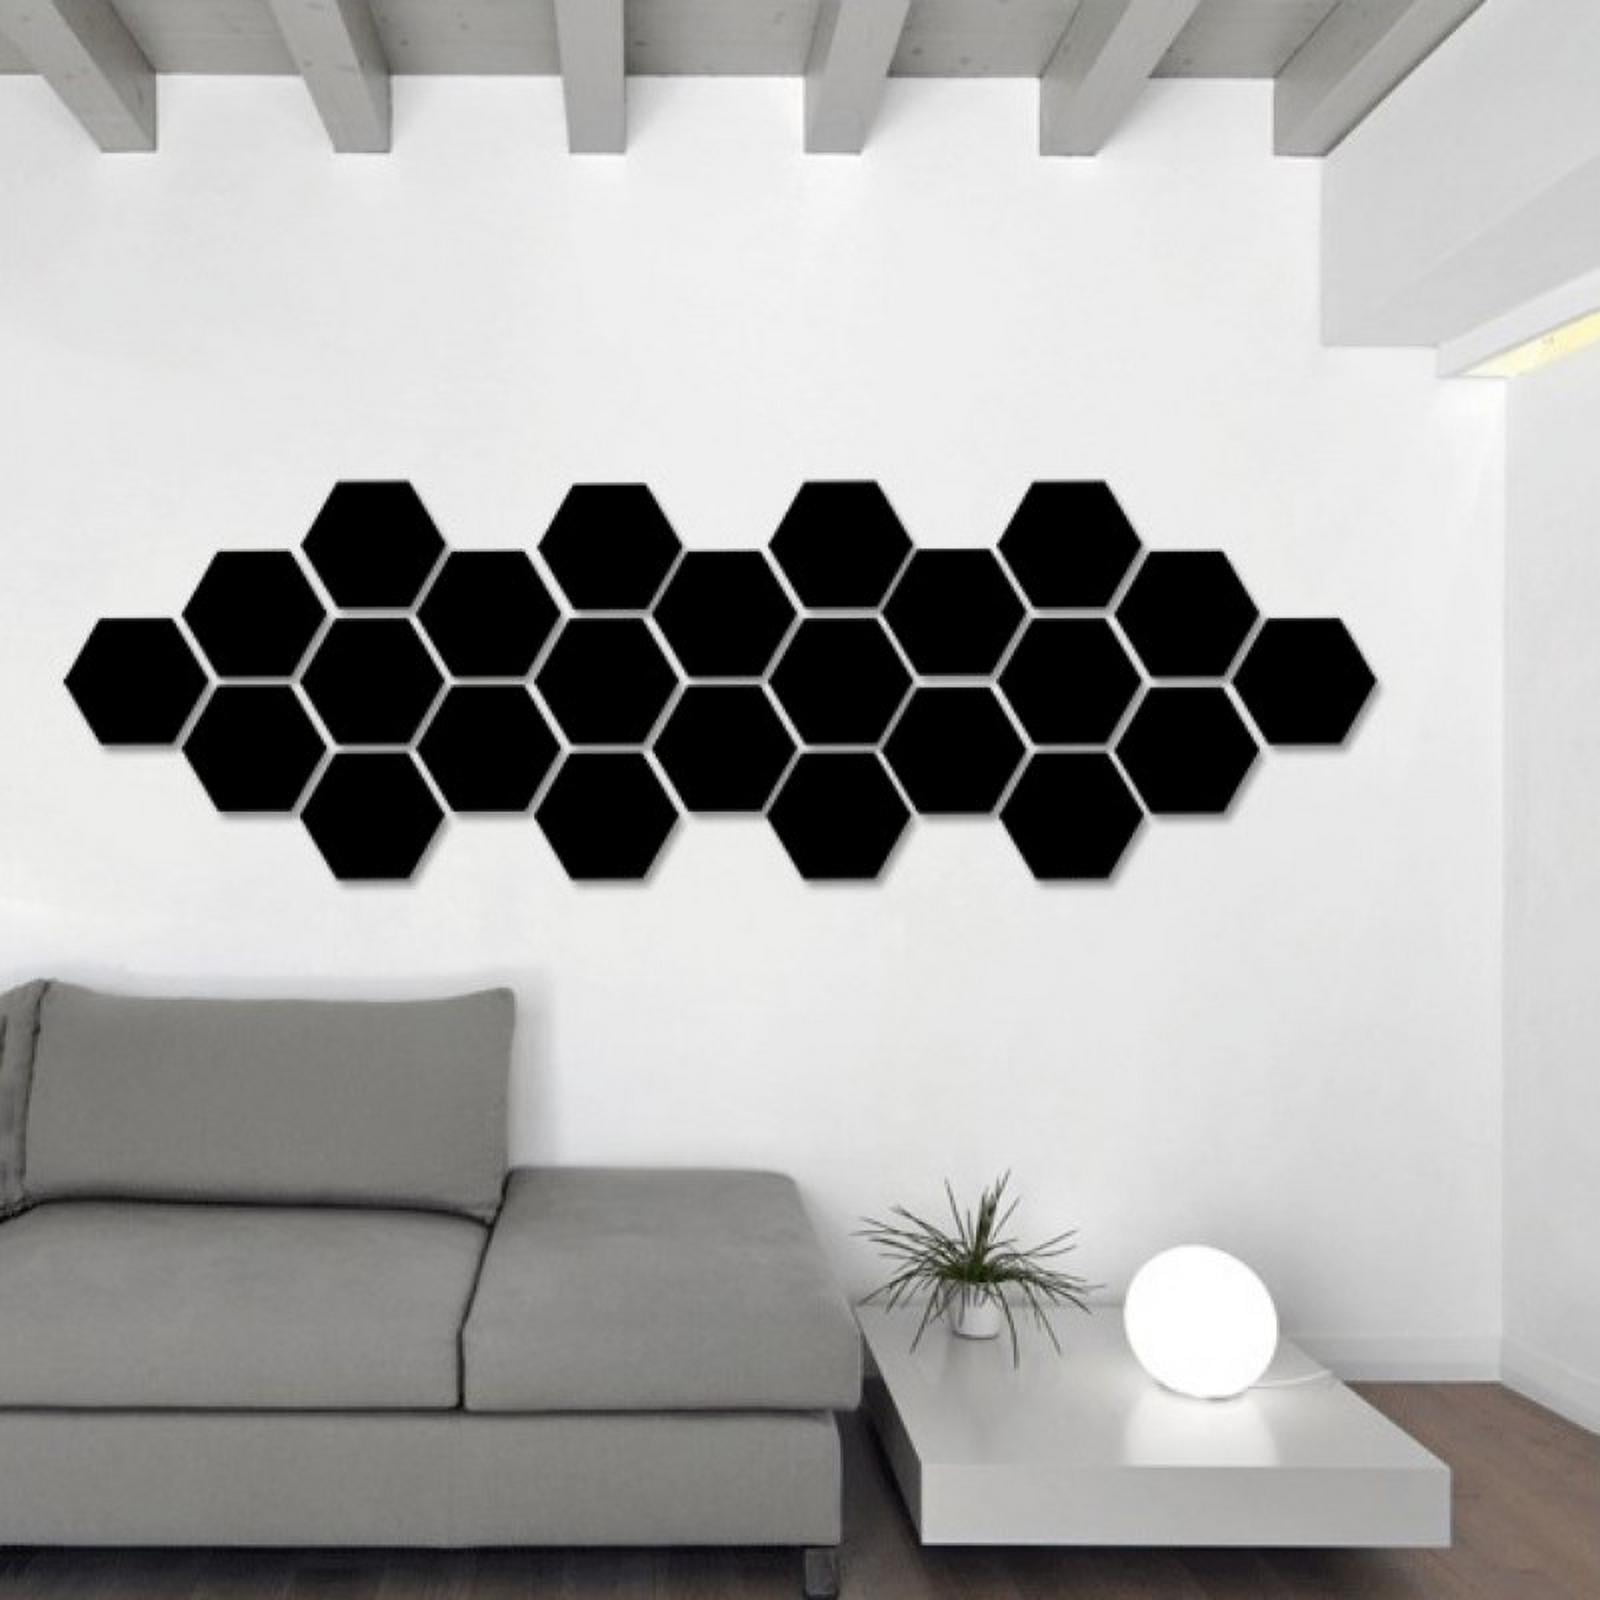 Hexagonal Acrylic Wall Tiles White 